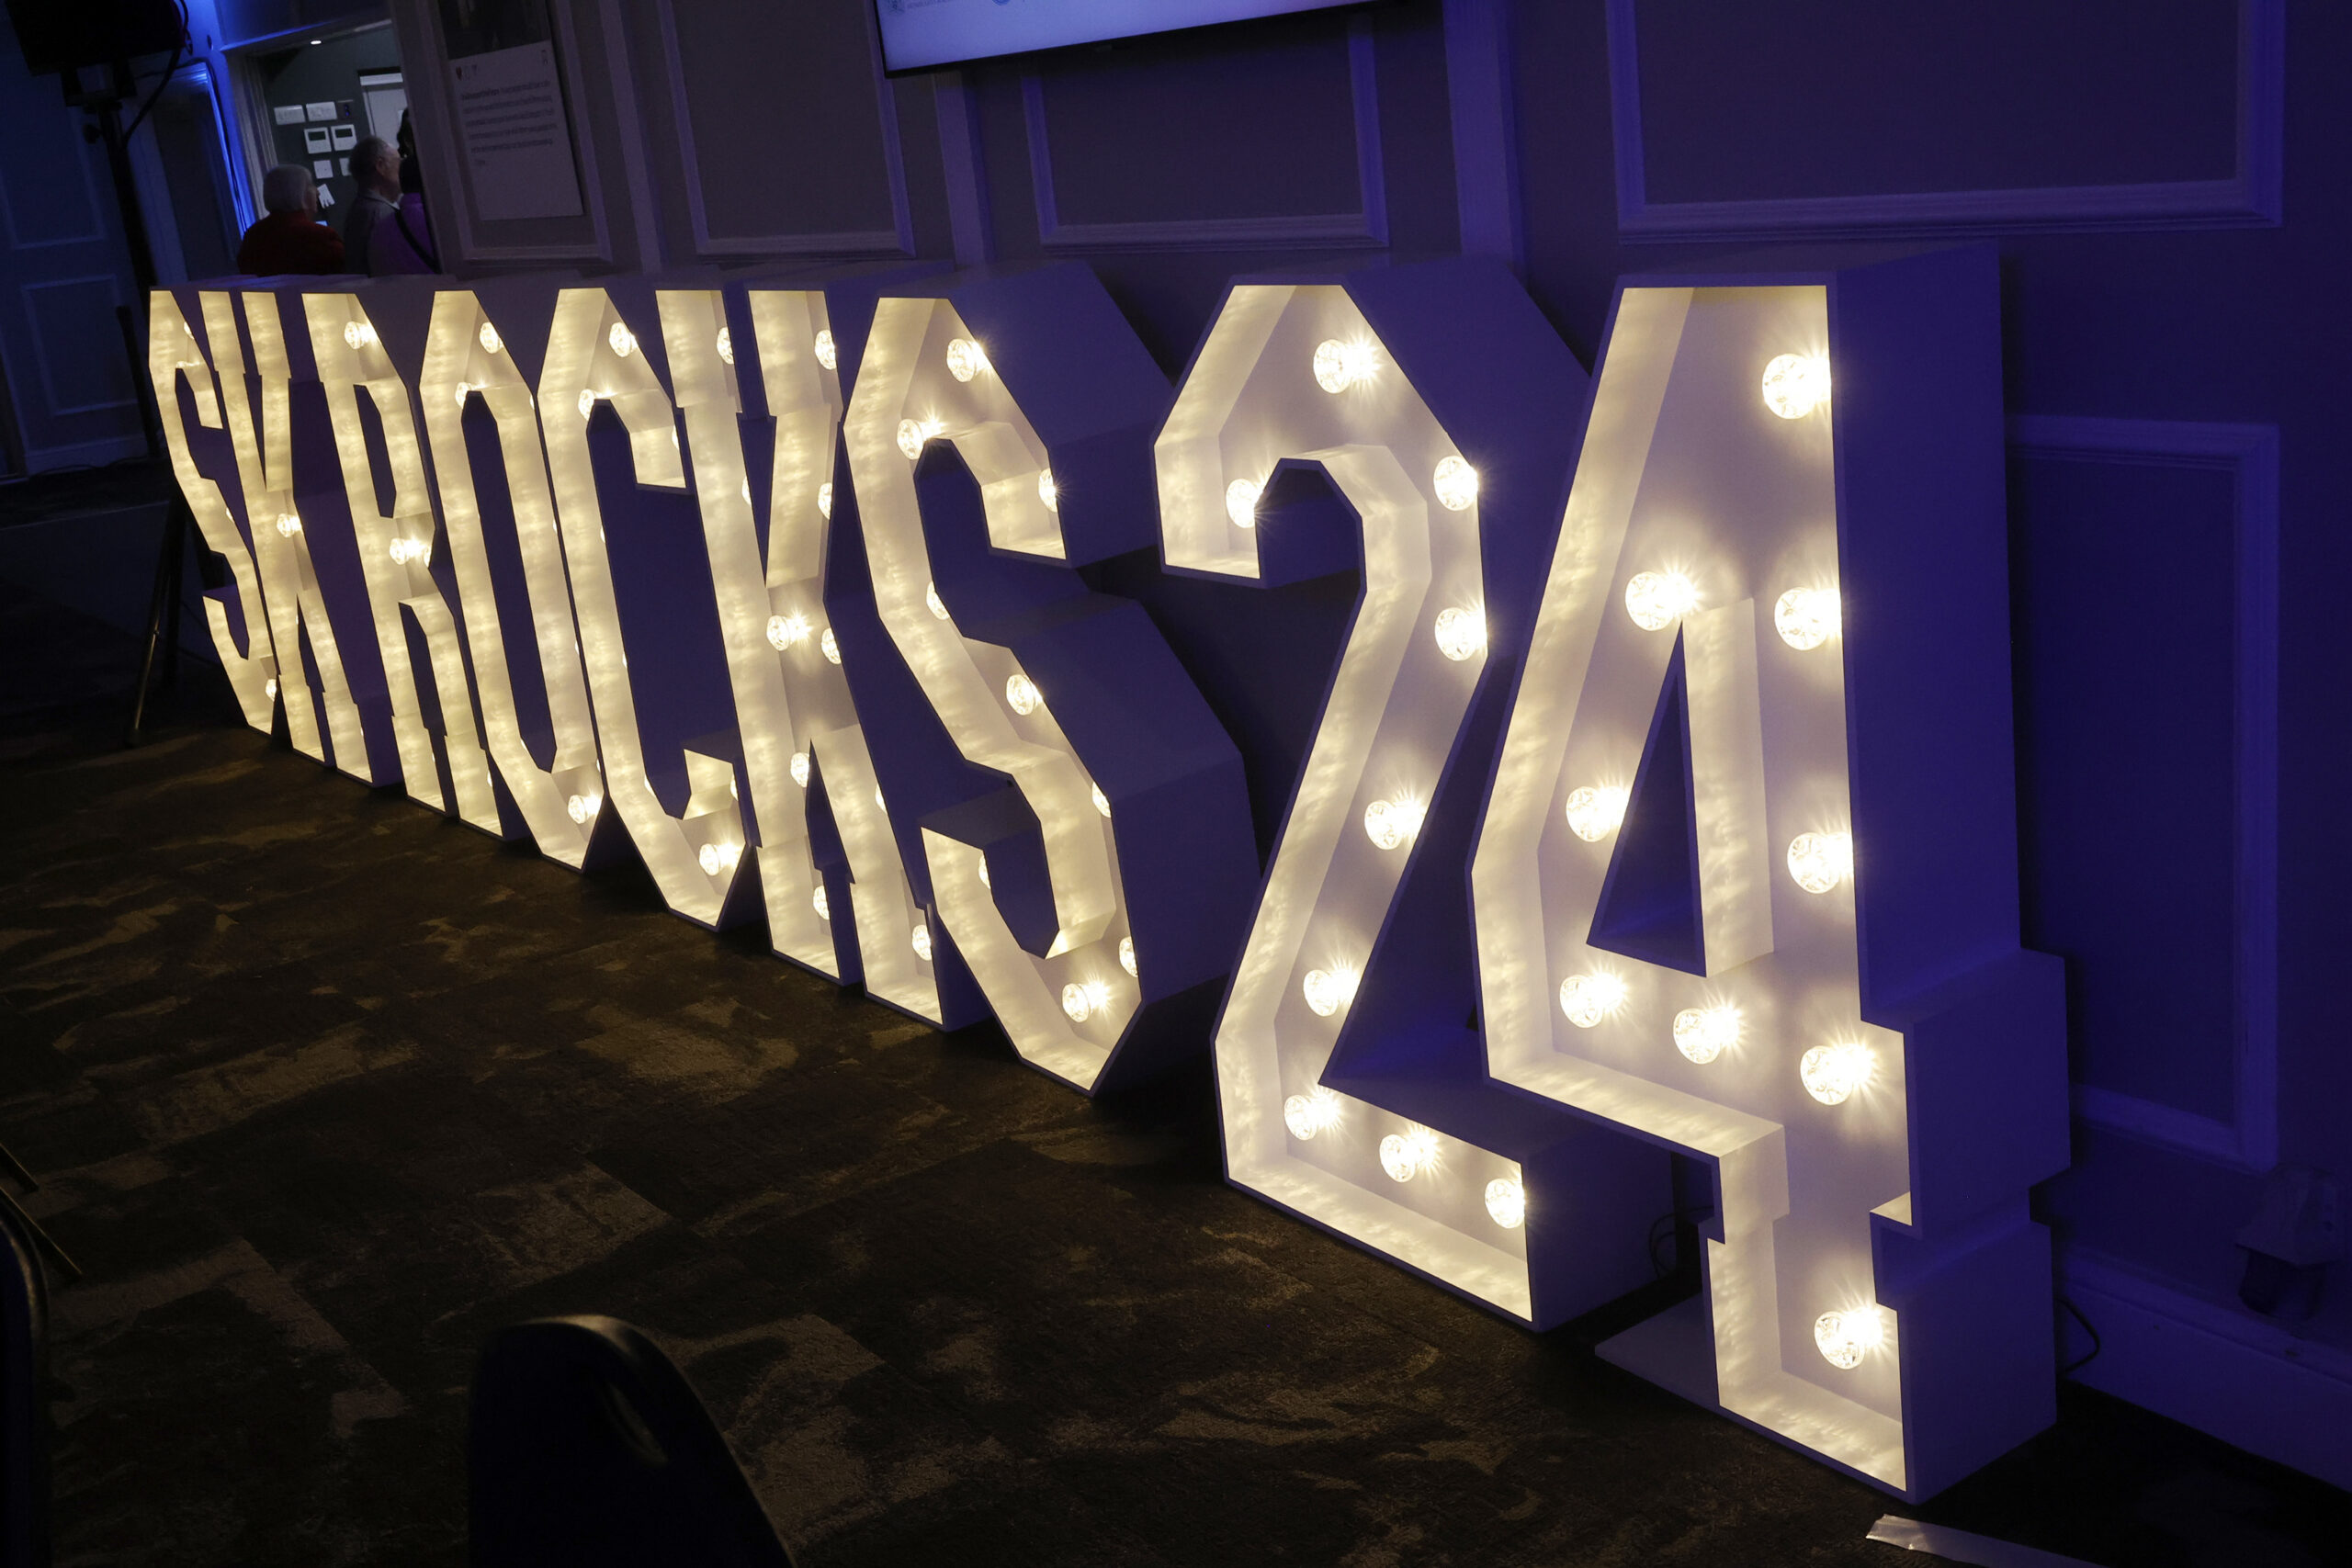 Letters spelling 'SK Rocks' lit up in a dark room